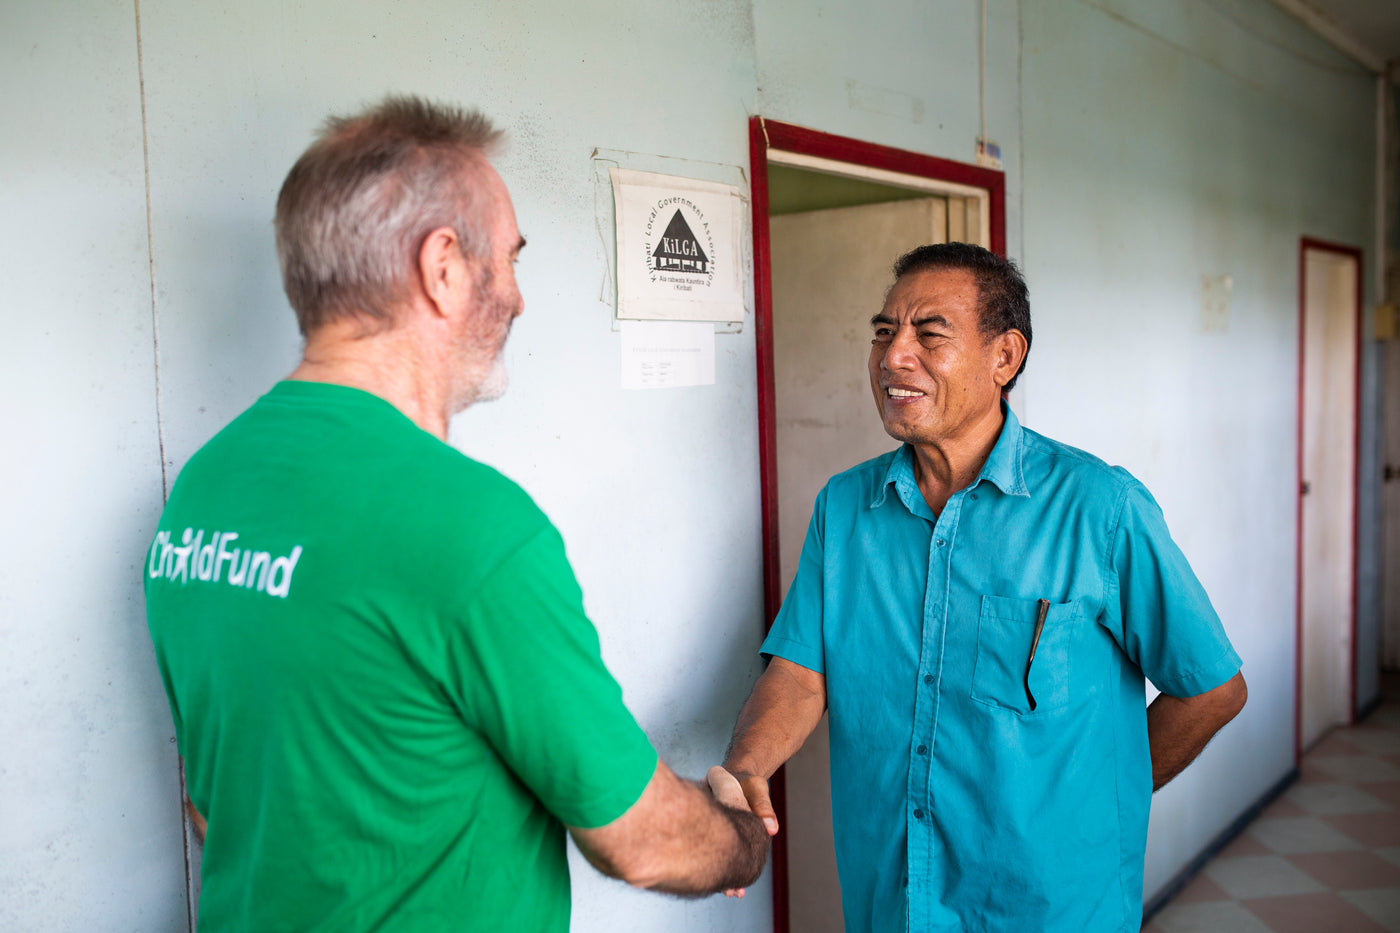 ChildFund has partnered with KiLGA in Kiribati